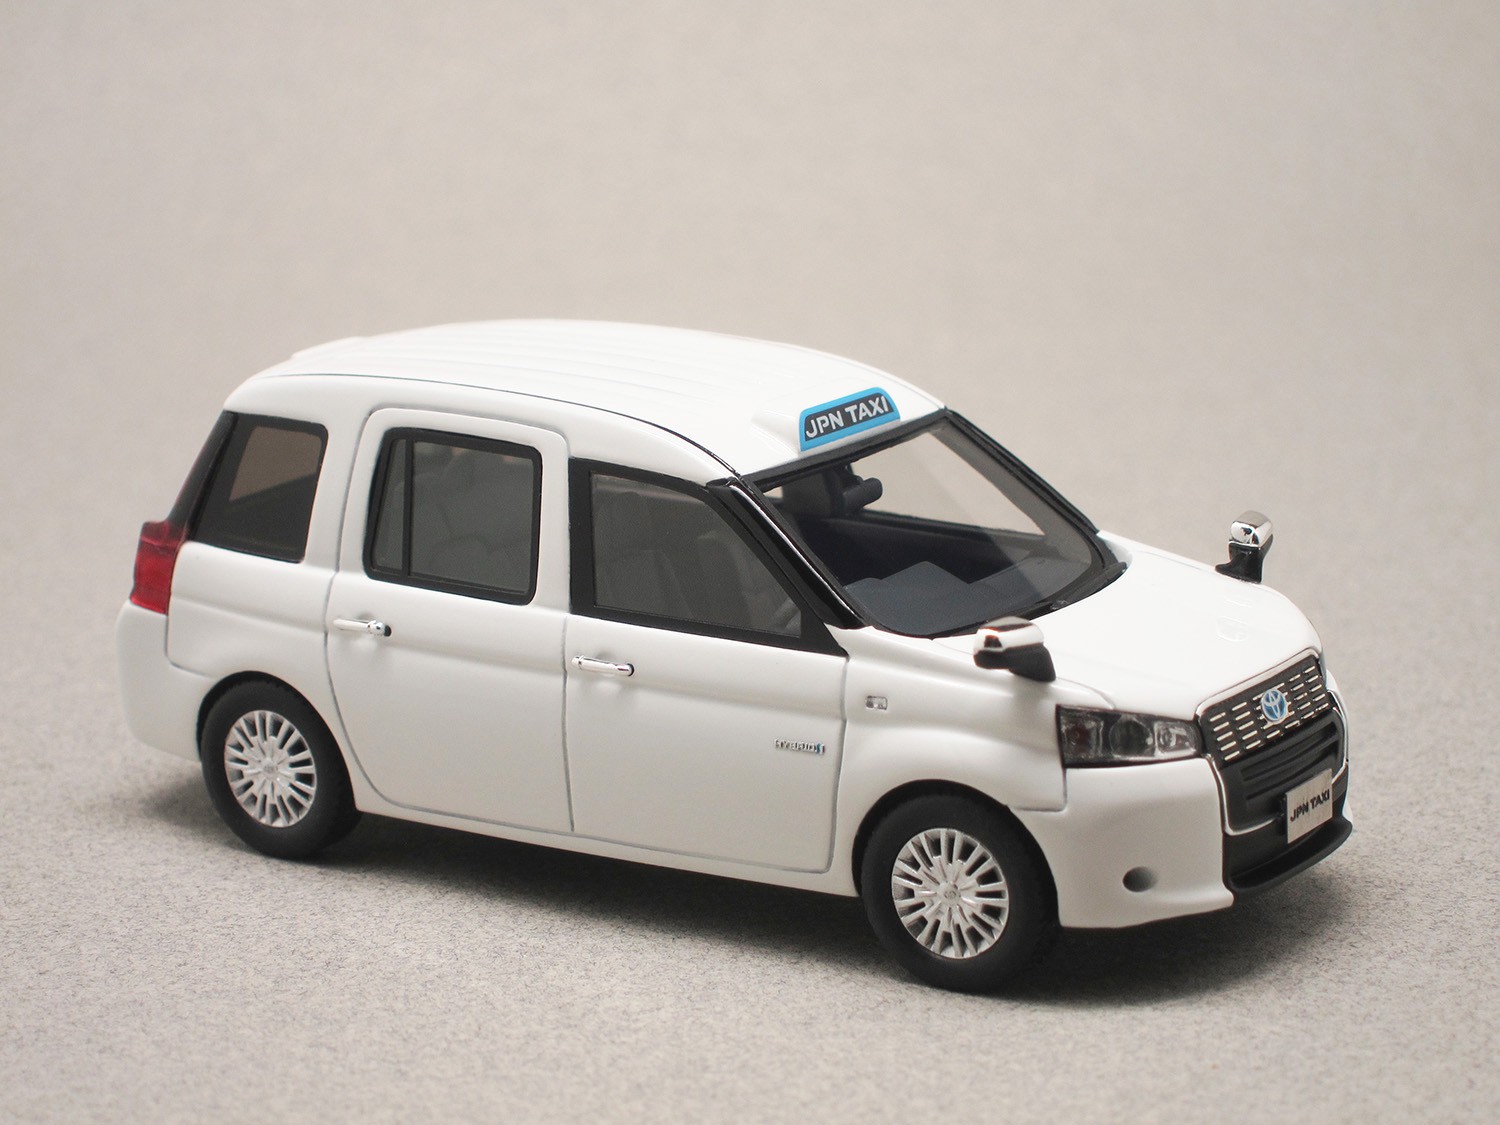 Toyota JPN taxi (Hi-Story) 1:43